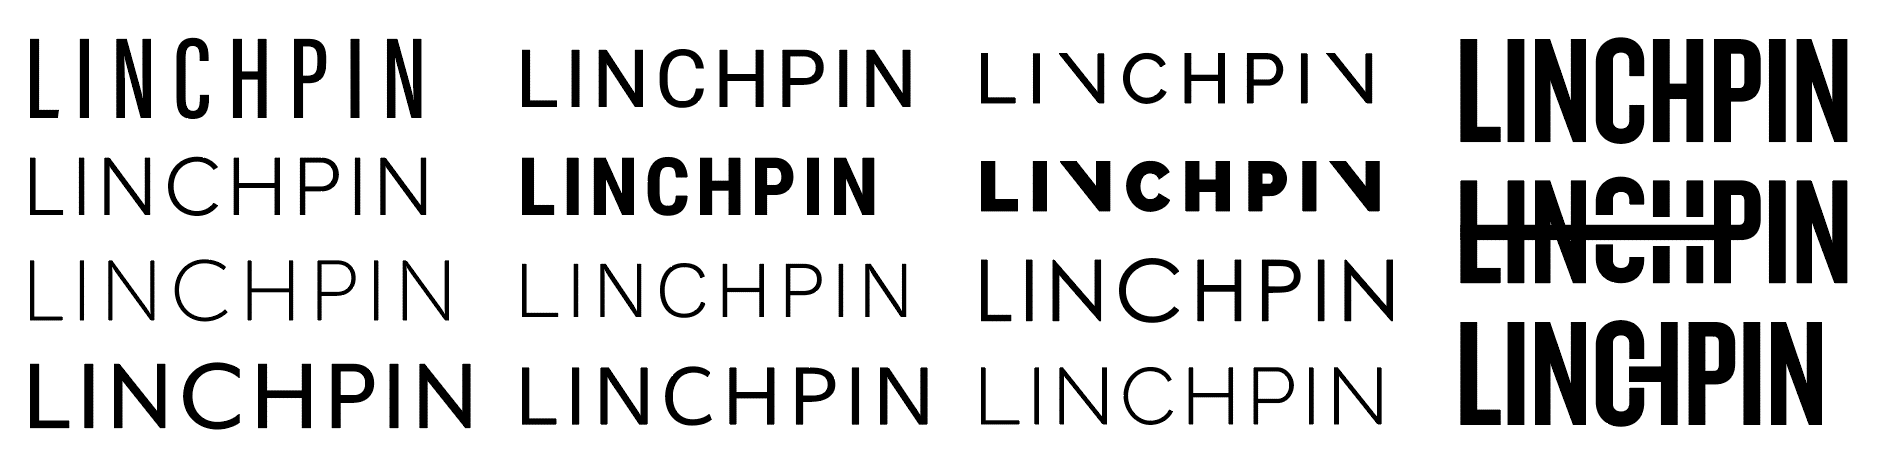 Linchpin brand typesetting